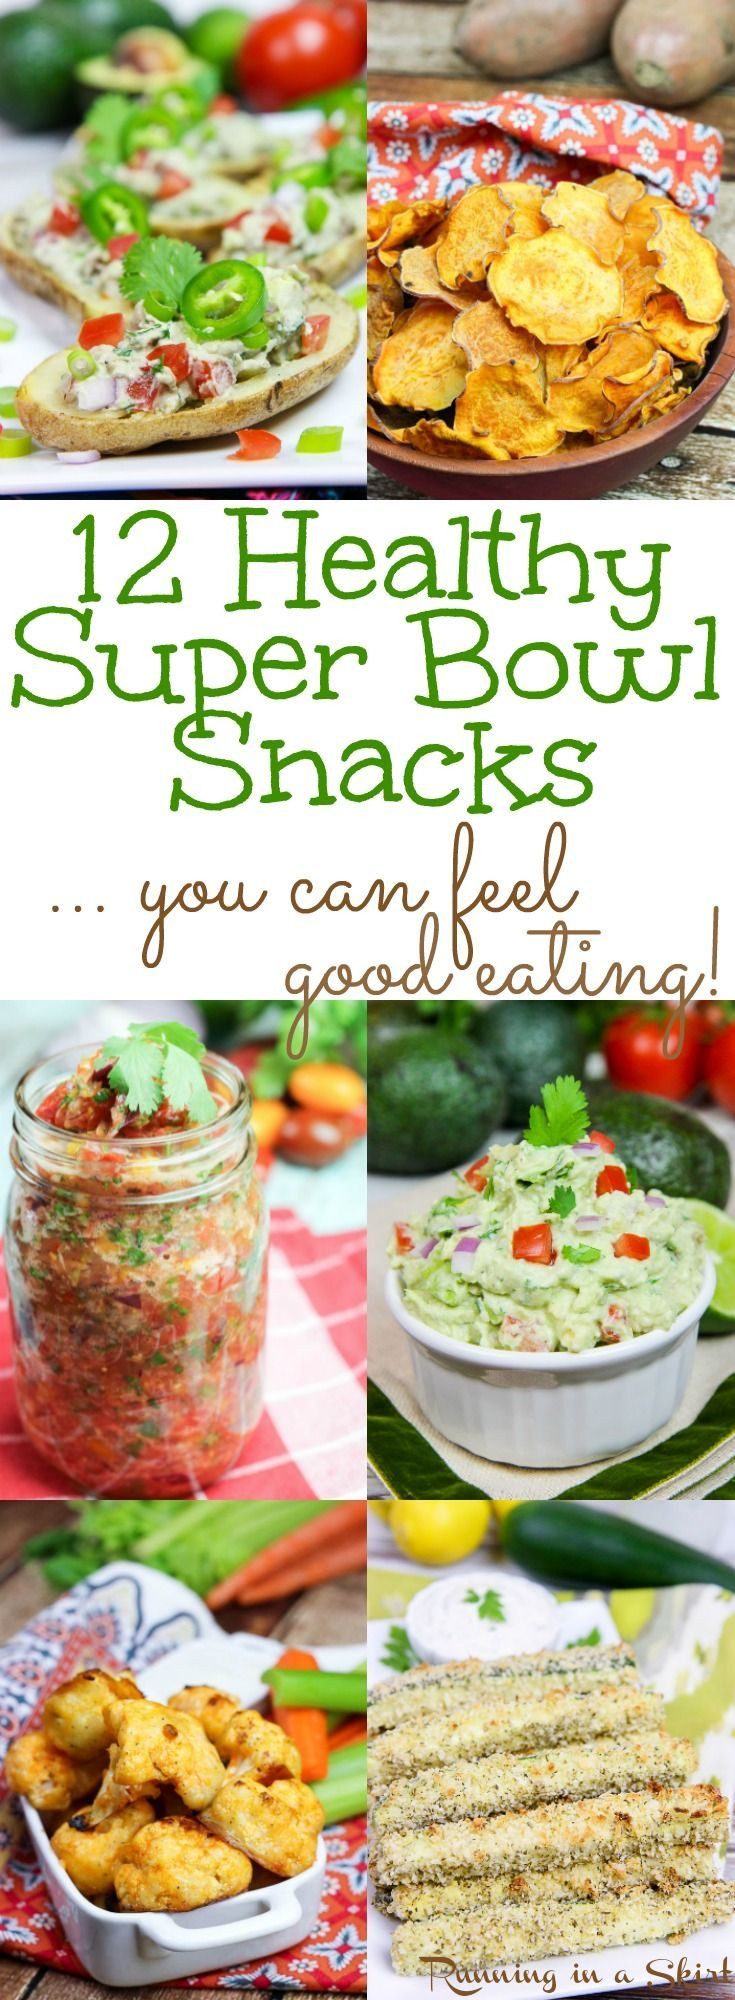 Healthy Super Bowl Appetizer Recipes
 12 Ve arian & Healthy Super Bowl Snacks